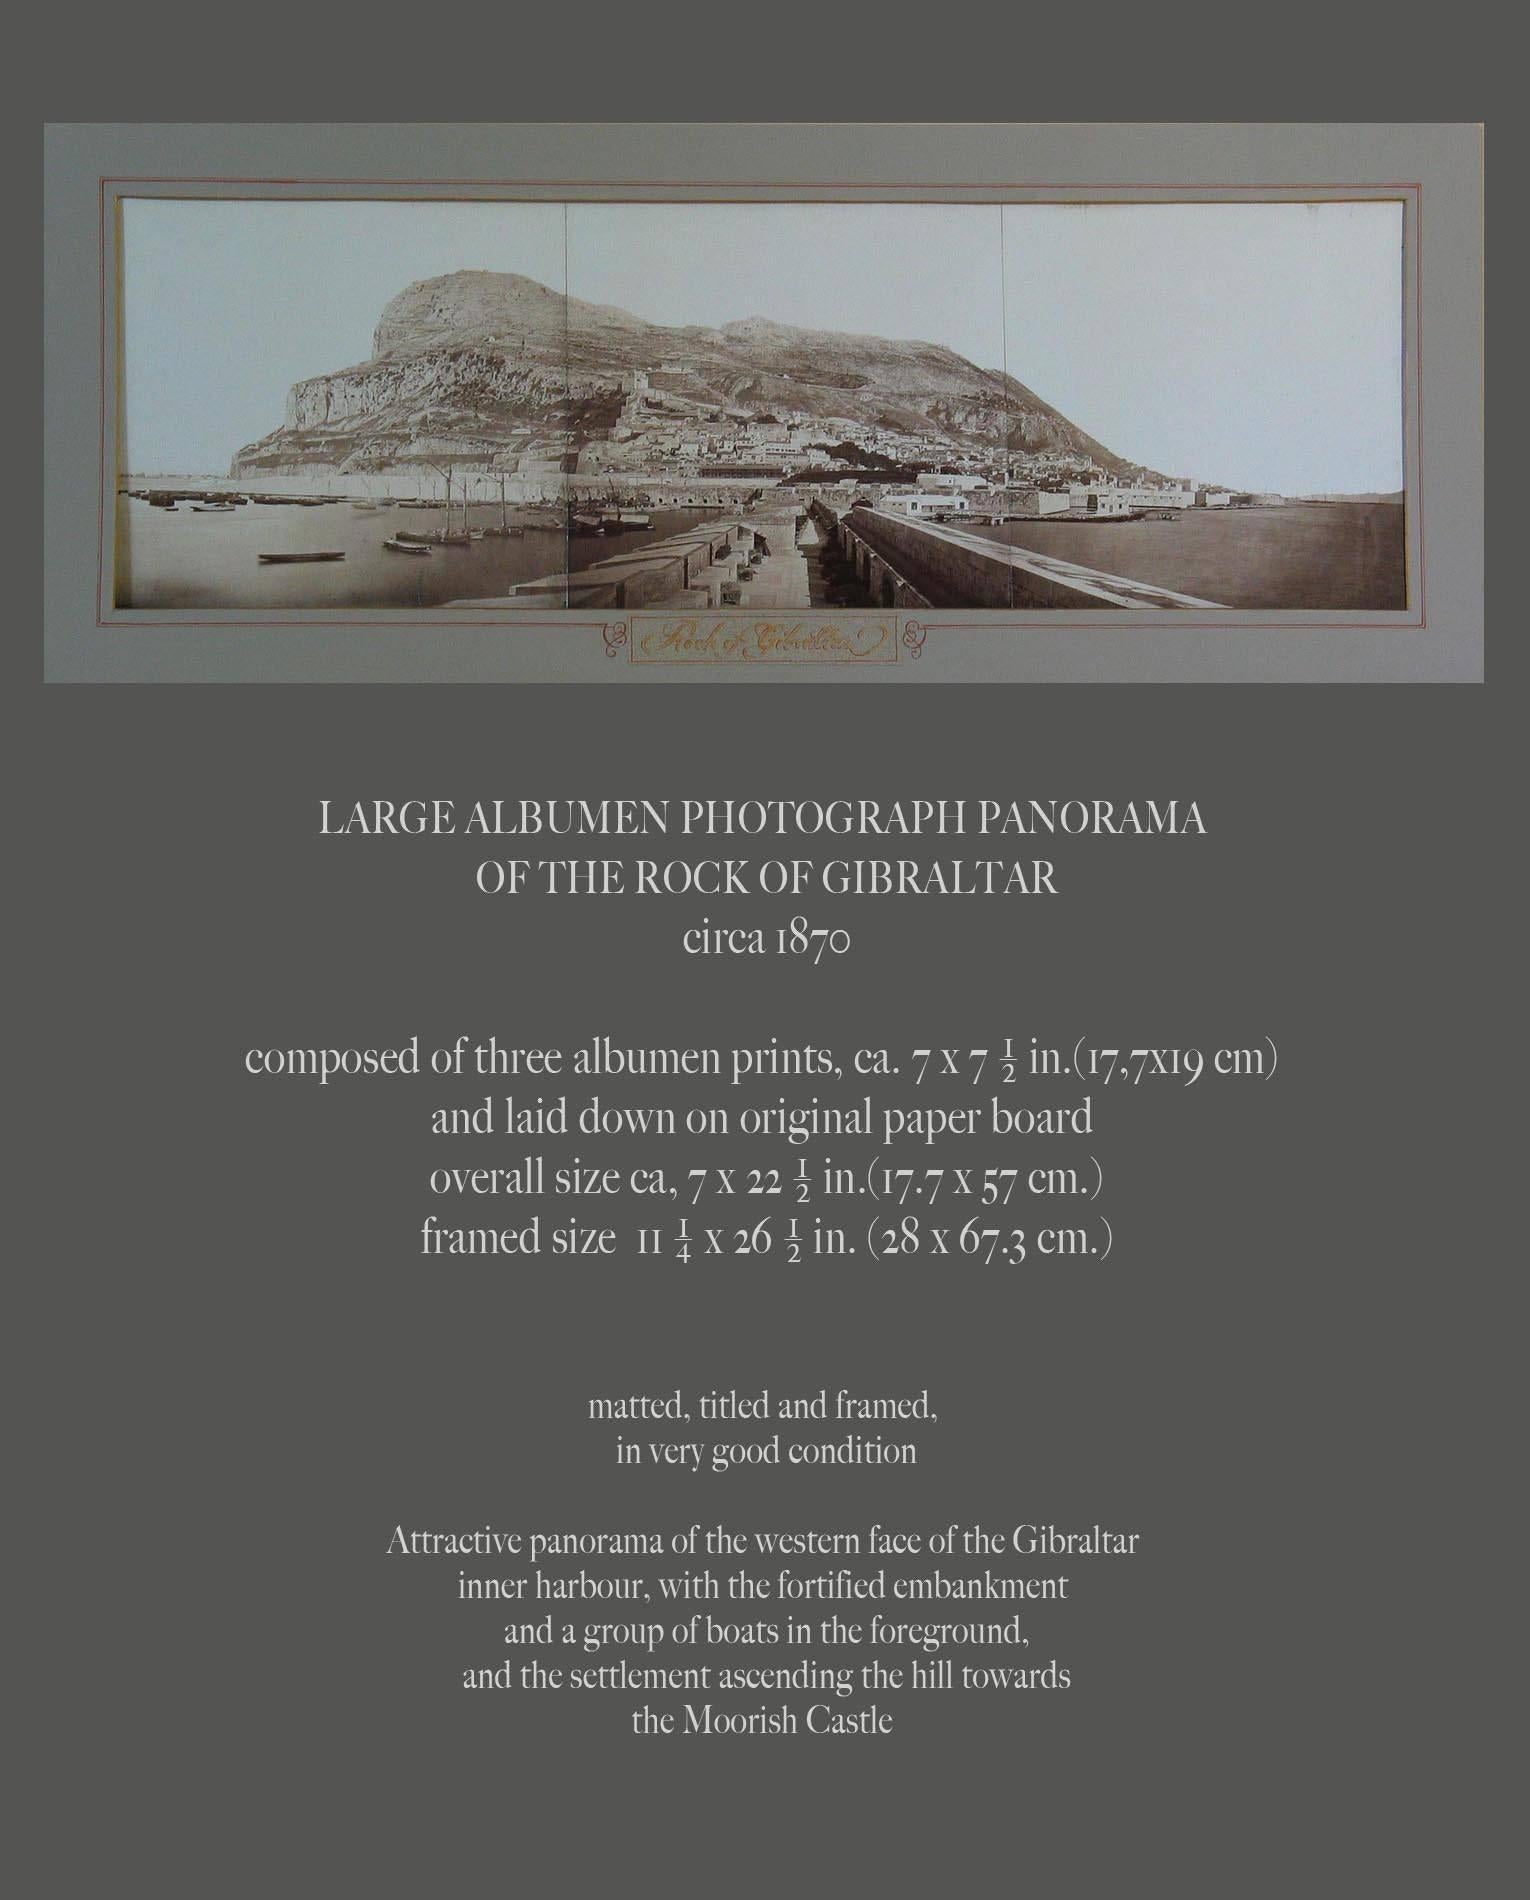 Large Albumen photograph Panorama of The Rock of Gibraltar, circa 1870,
Composed of three albumen prints, ca. 7